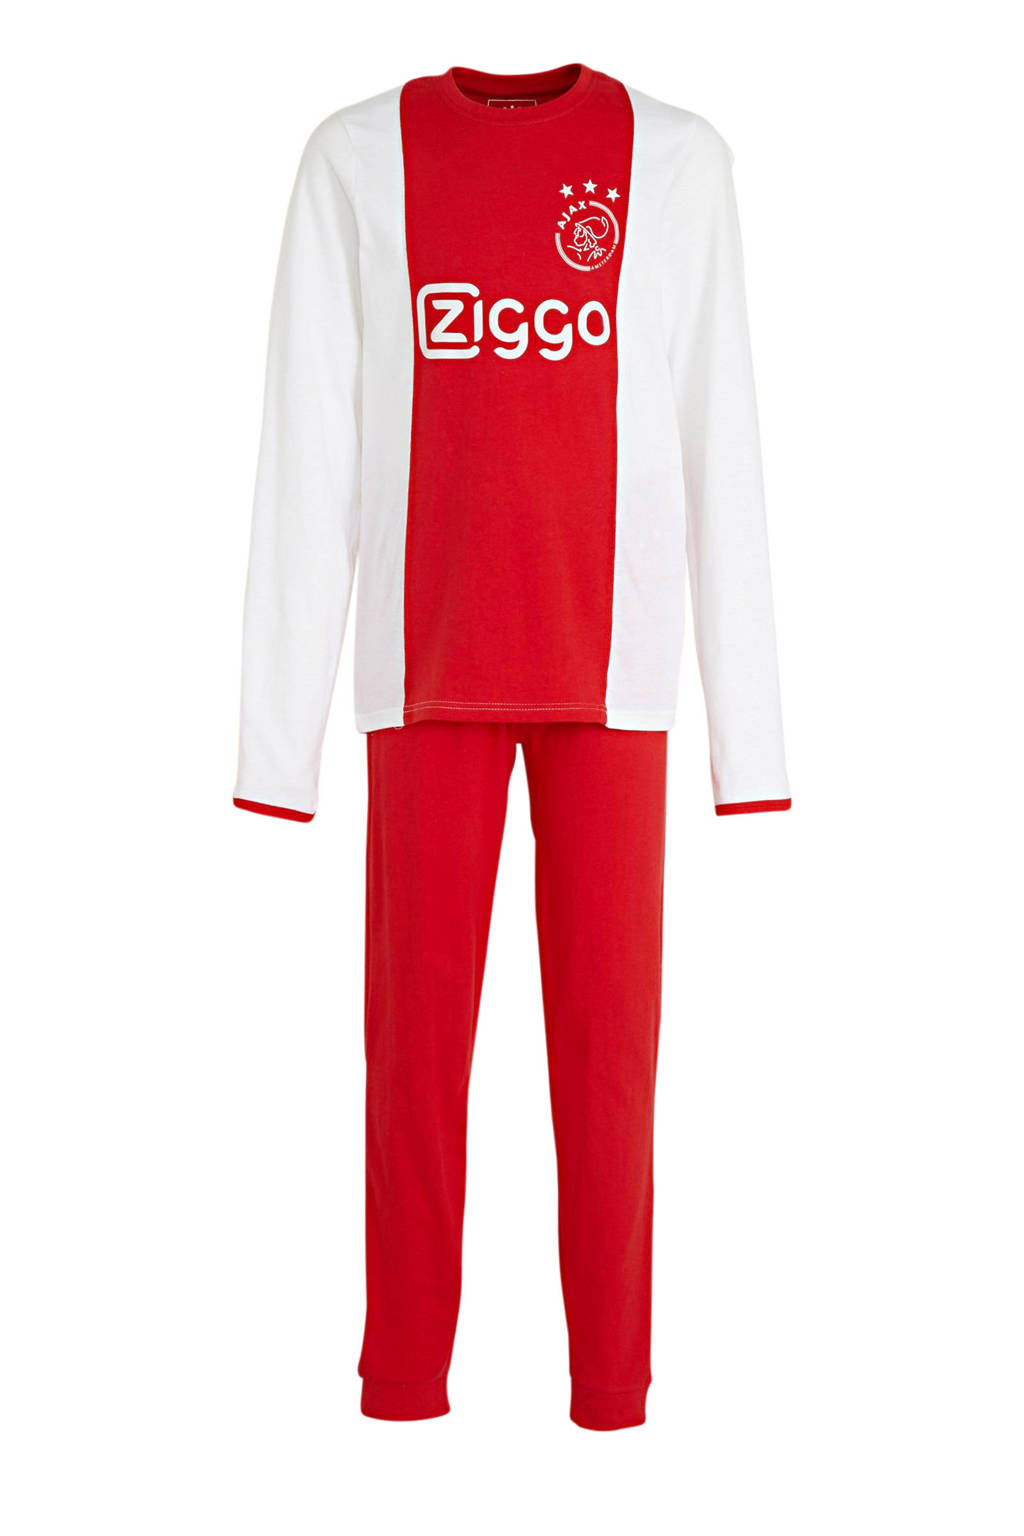 hoop Onderzoek Anemoon vis Ajax Ajax pyjama met logo rood/wit | wehkamp